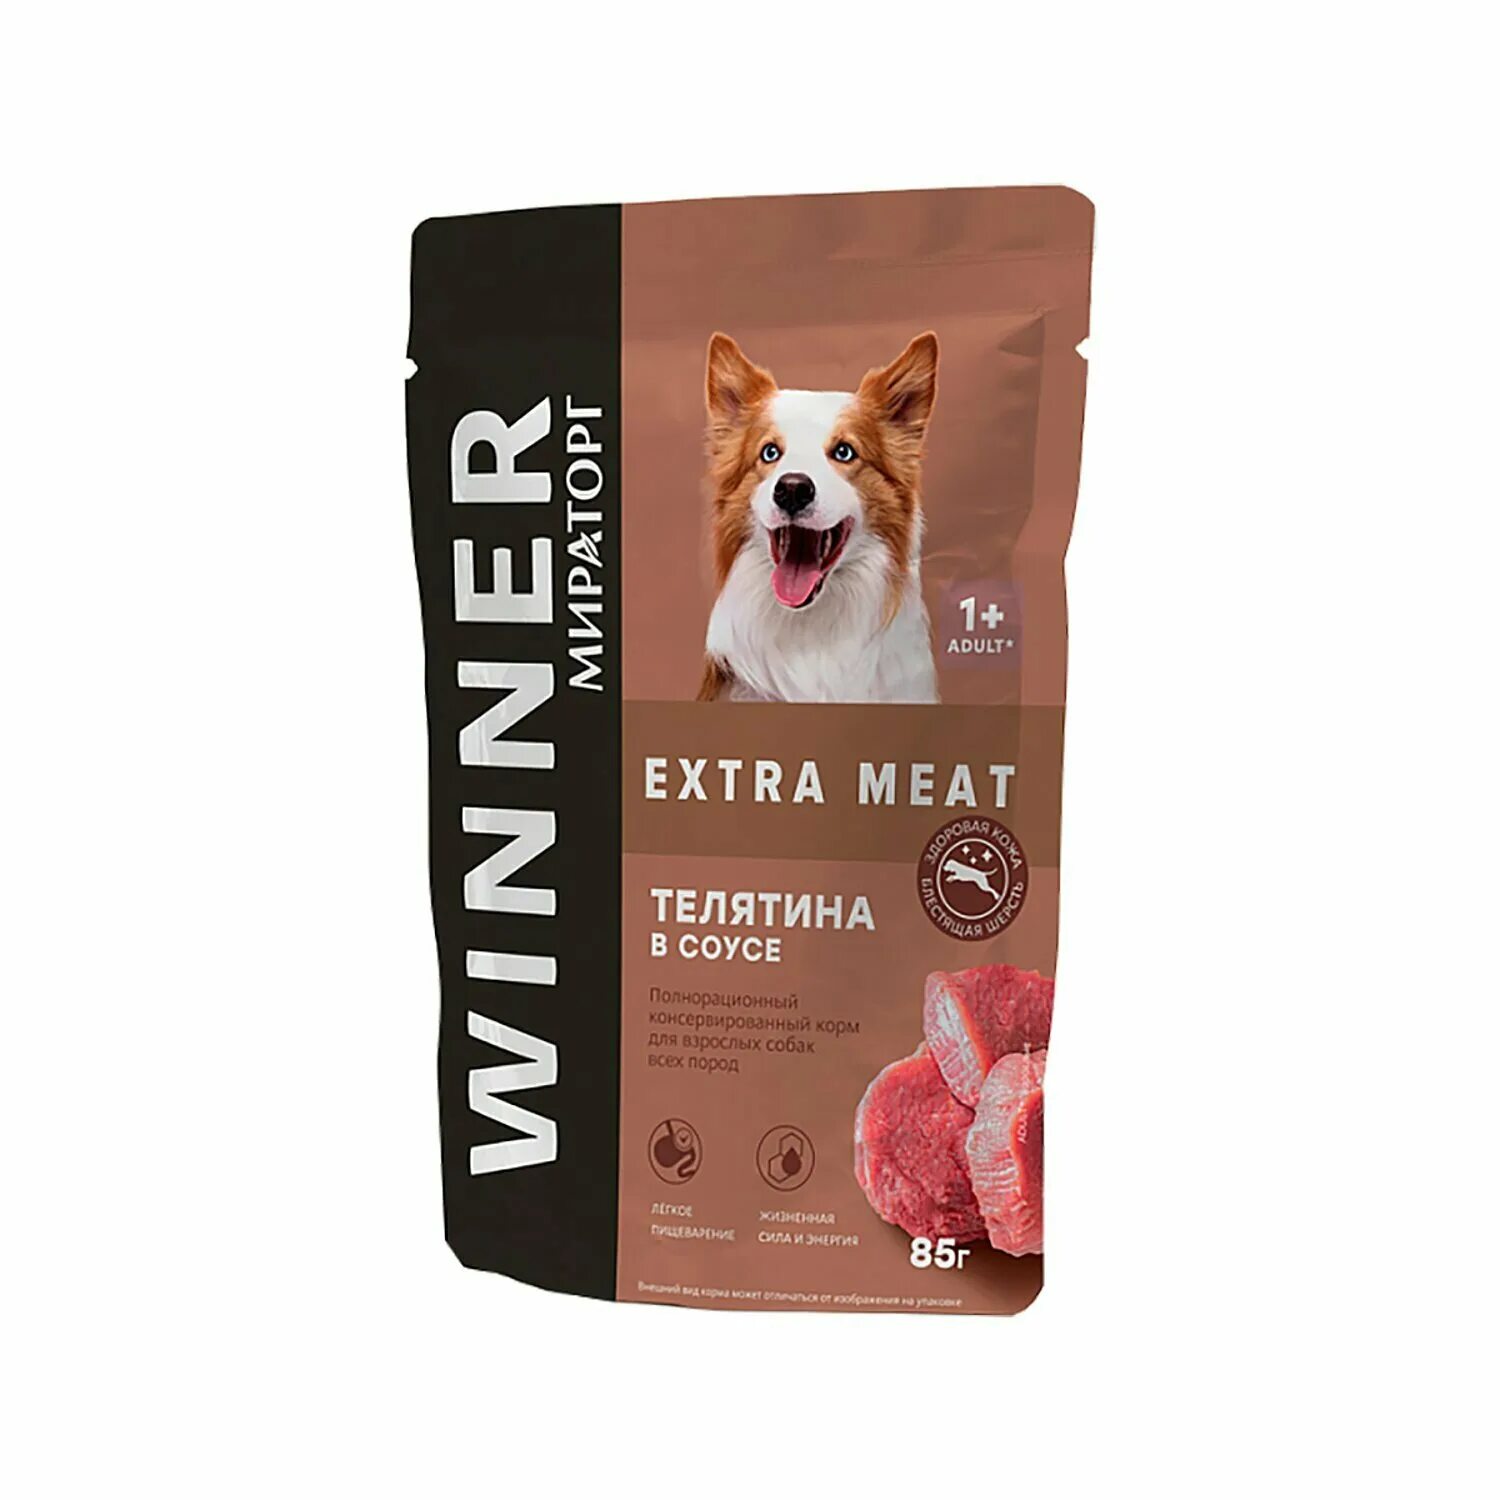 Корм winner Extra meat. Winner meat корм для собак. Корм для собак winner телятина в соусе, 85 г. Корм для собак Виннер телятина в соусе.